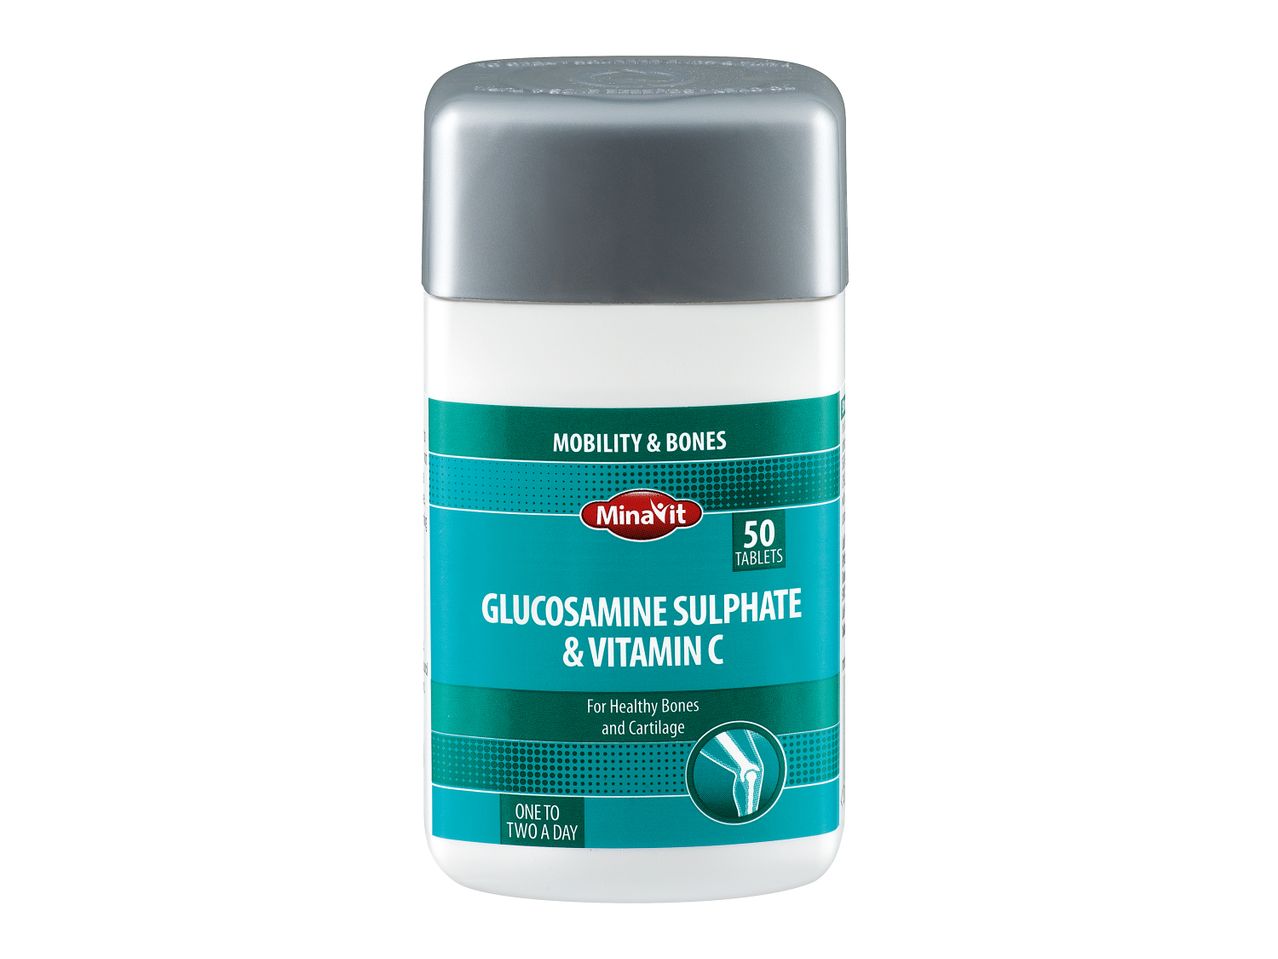 Go to full screen view: Minavit Glucosamine Sulphate & Vitamin C - Image 1